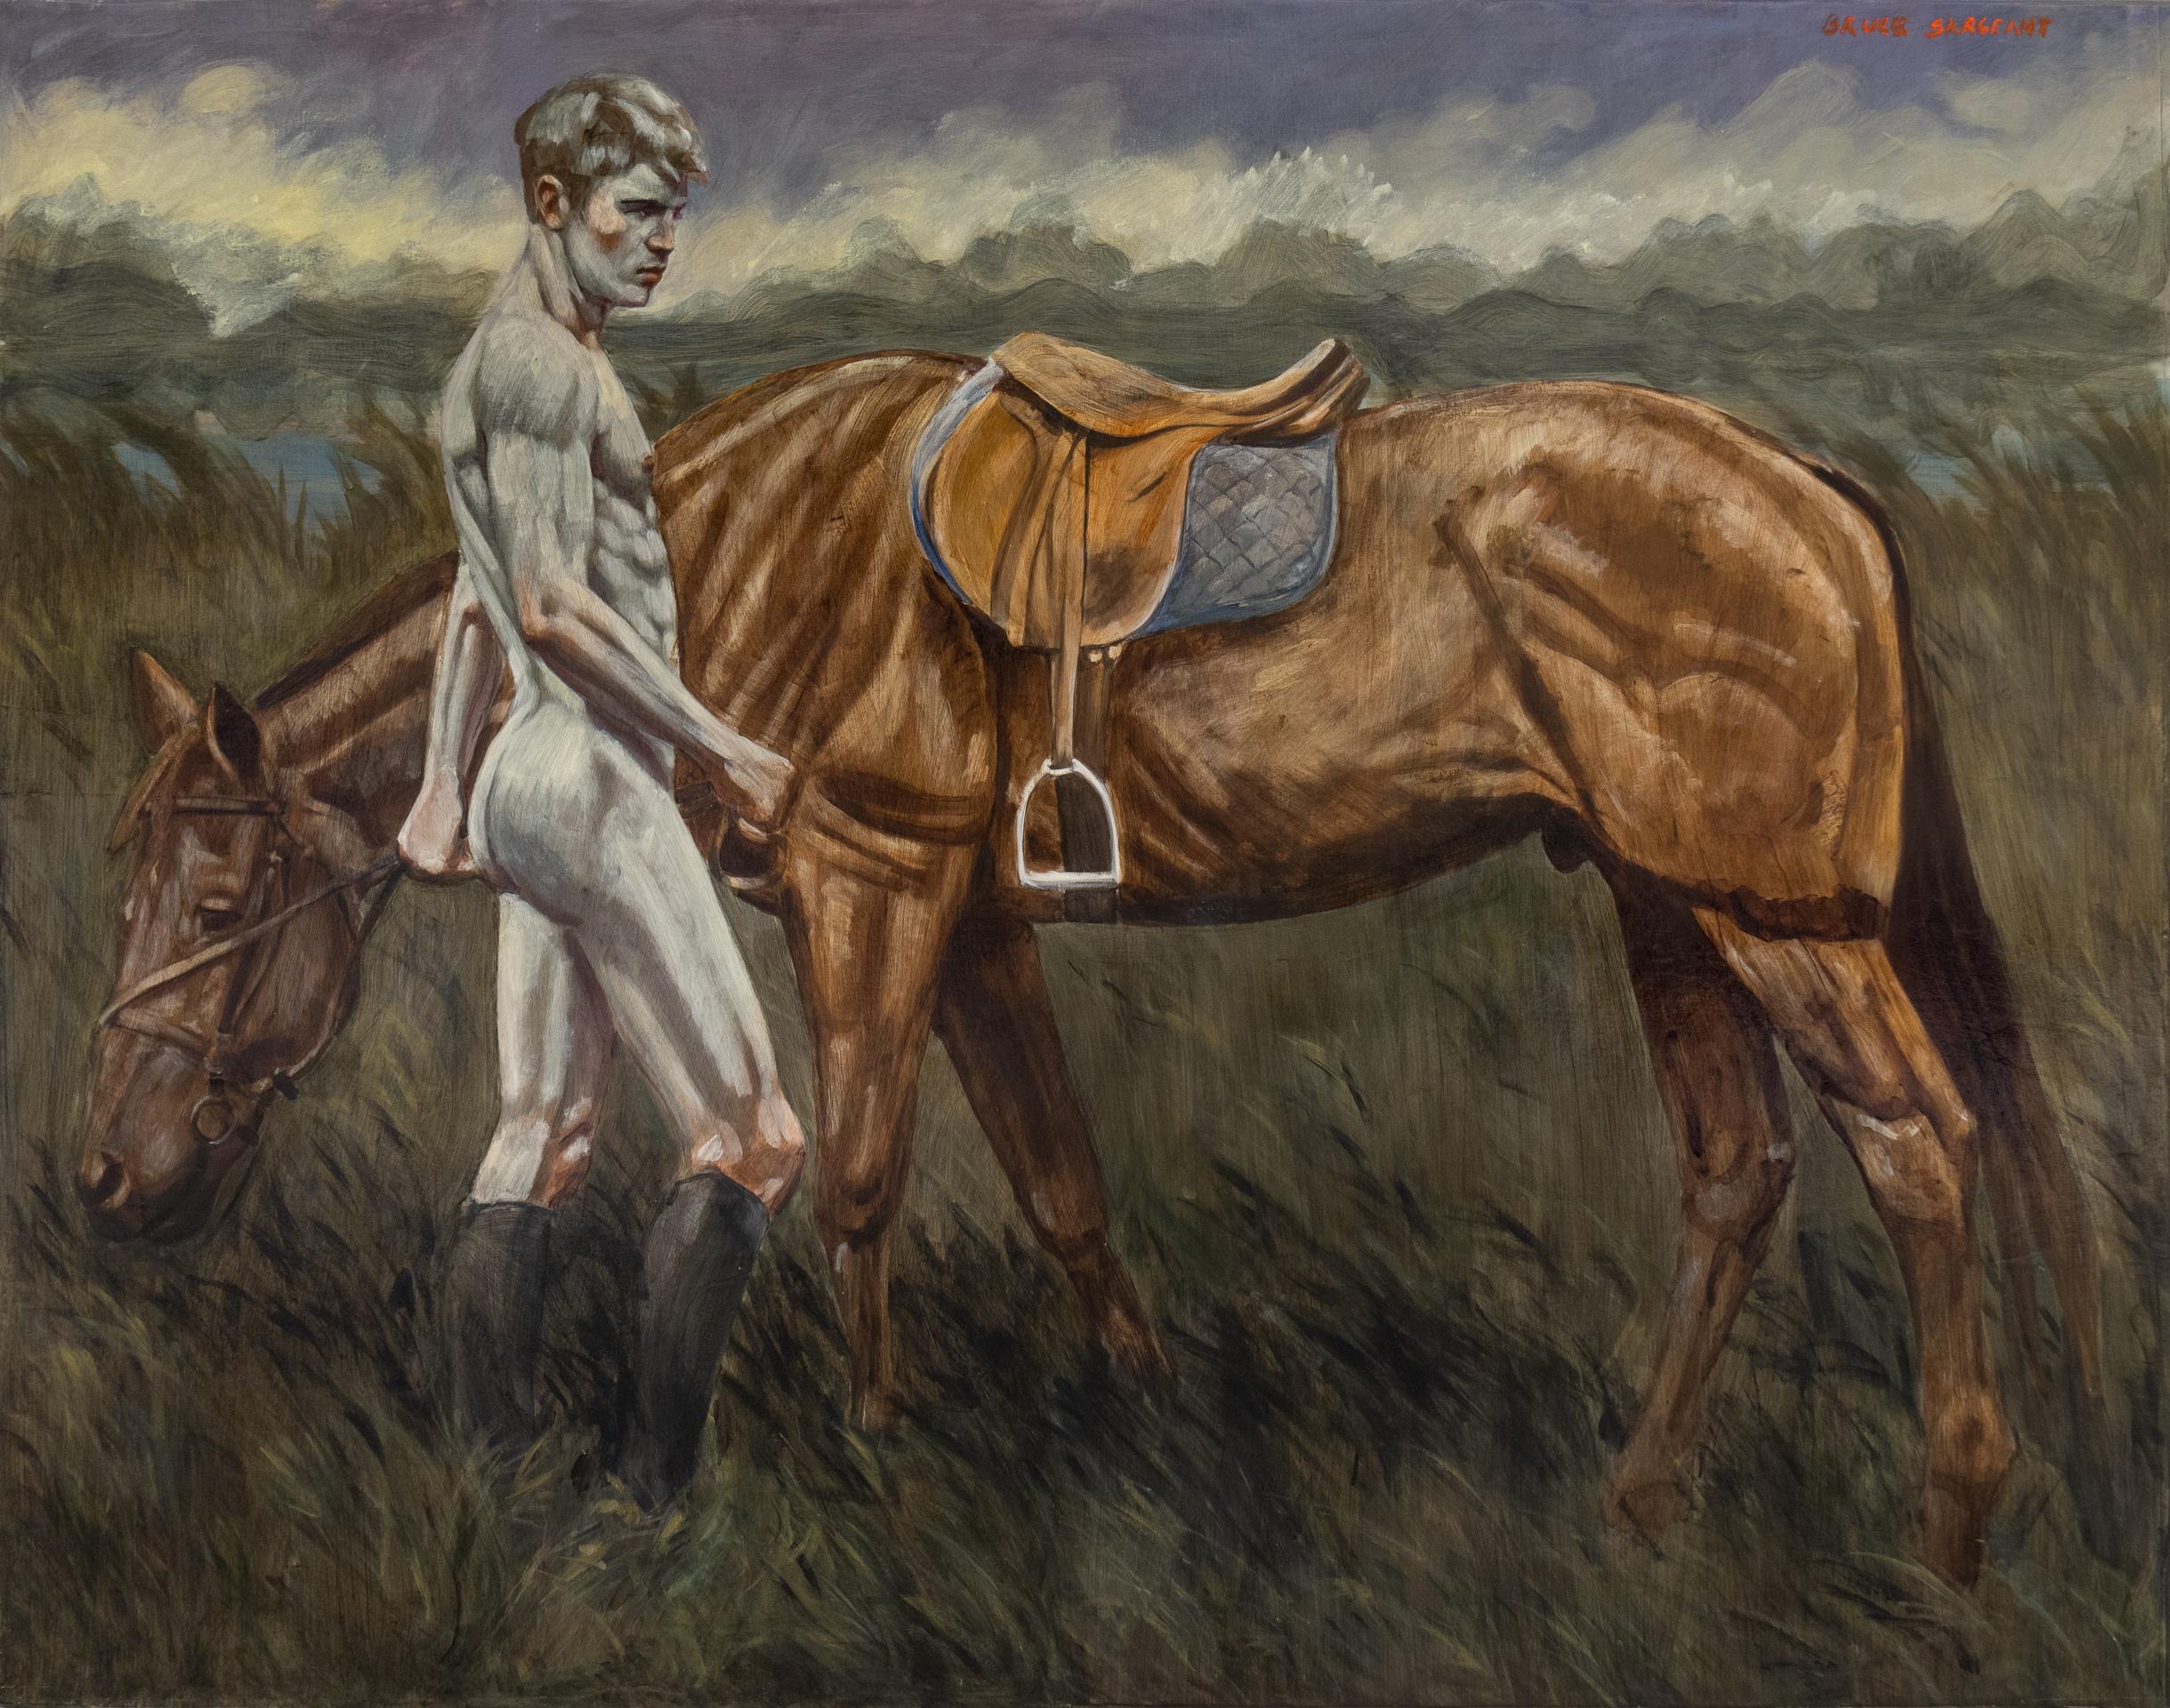 Figurative Painting Mark Beard - Bruce Sargeant (1898-1938) - Homme nu avec cheval